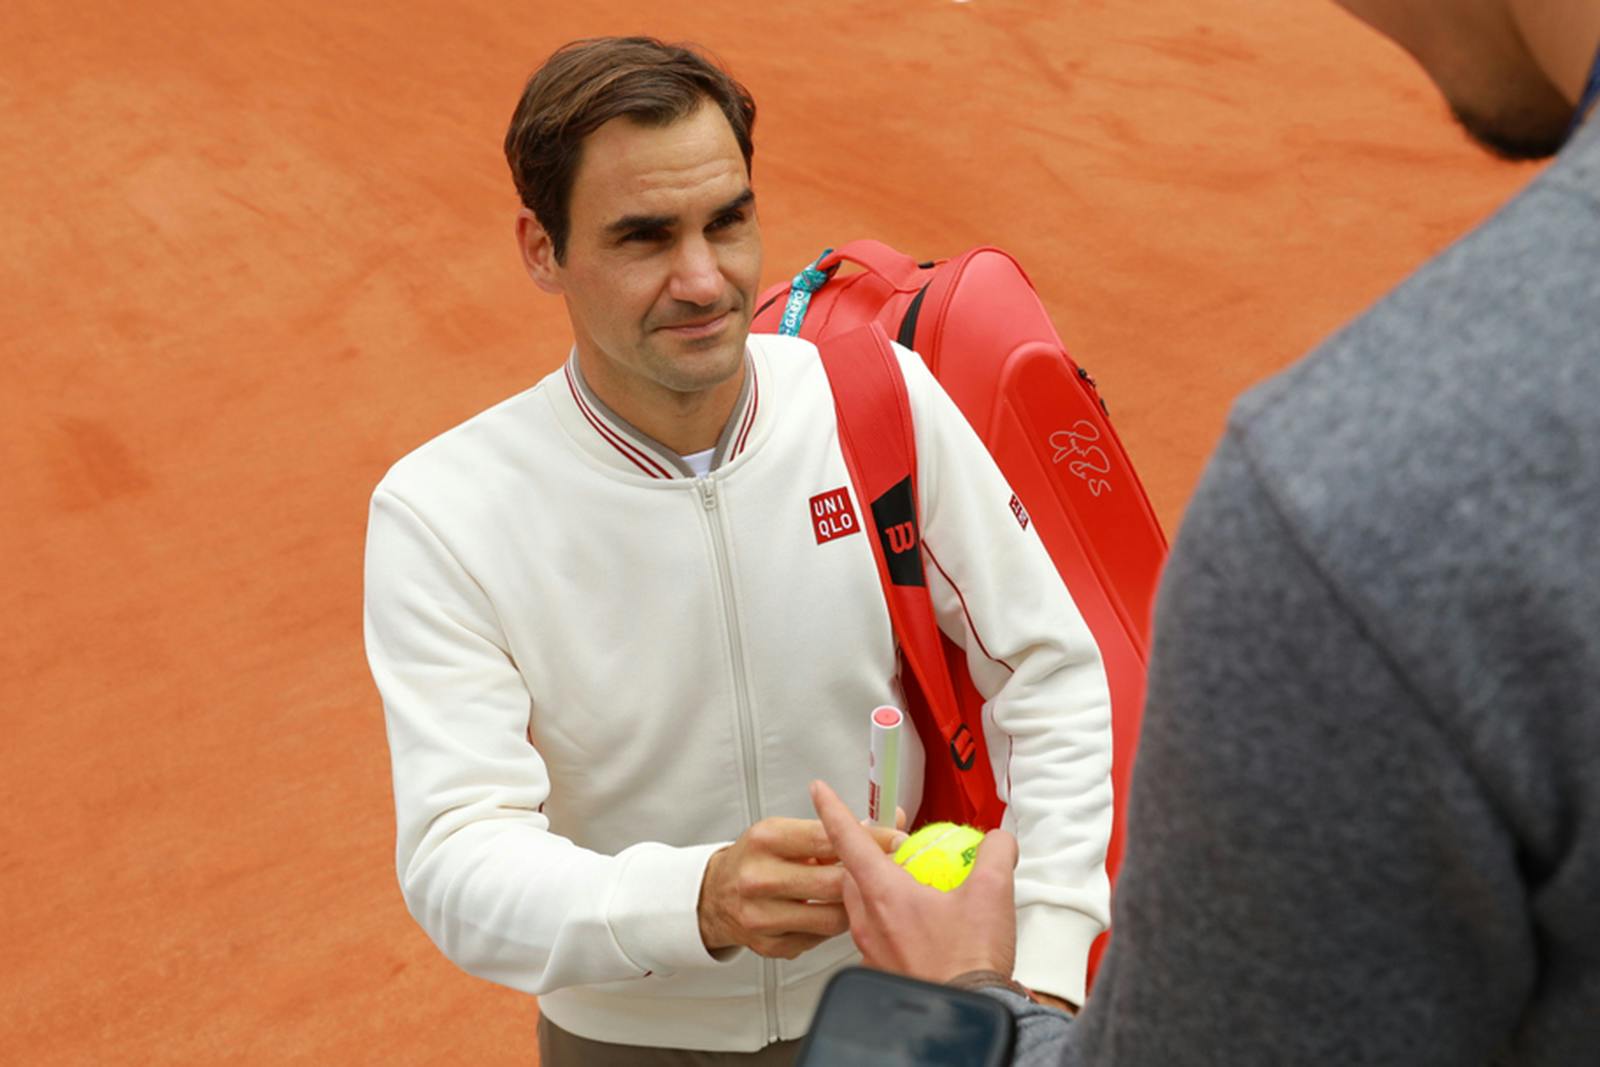 Roger Federer meets a fan at practice